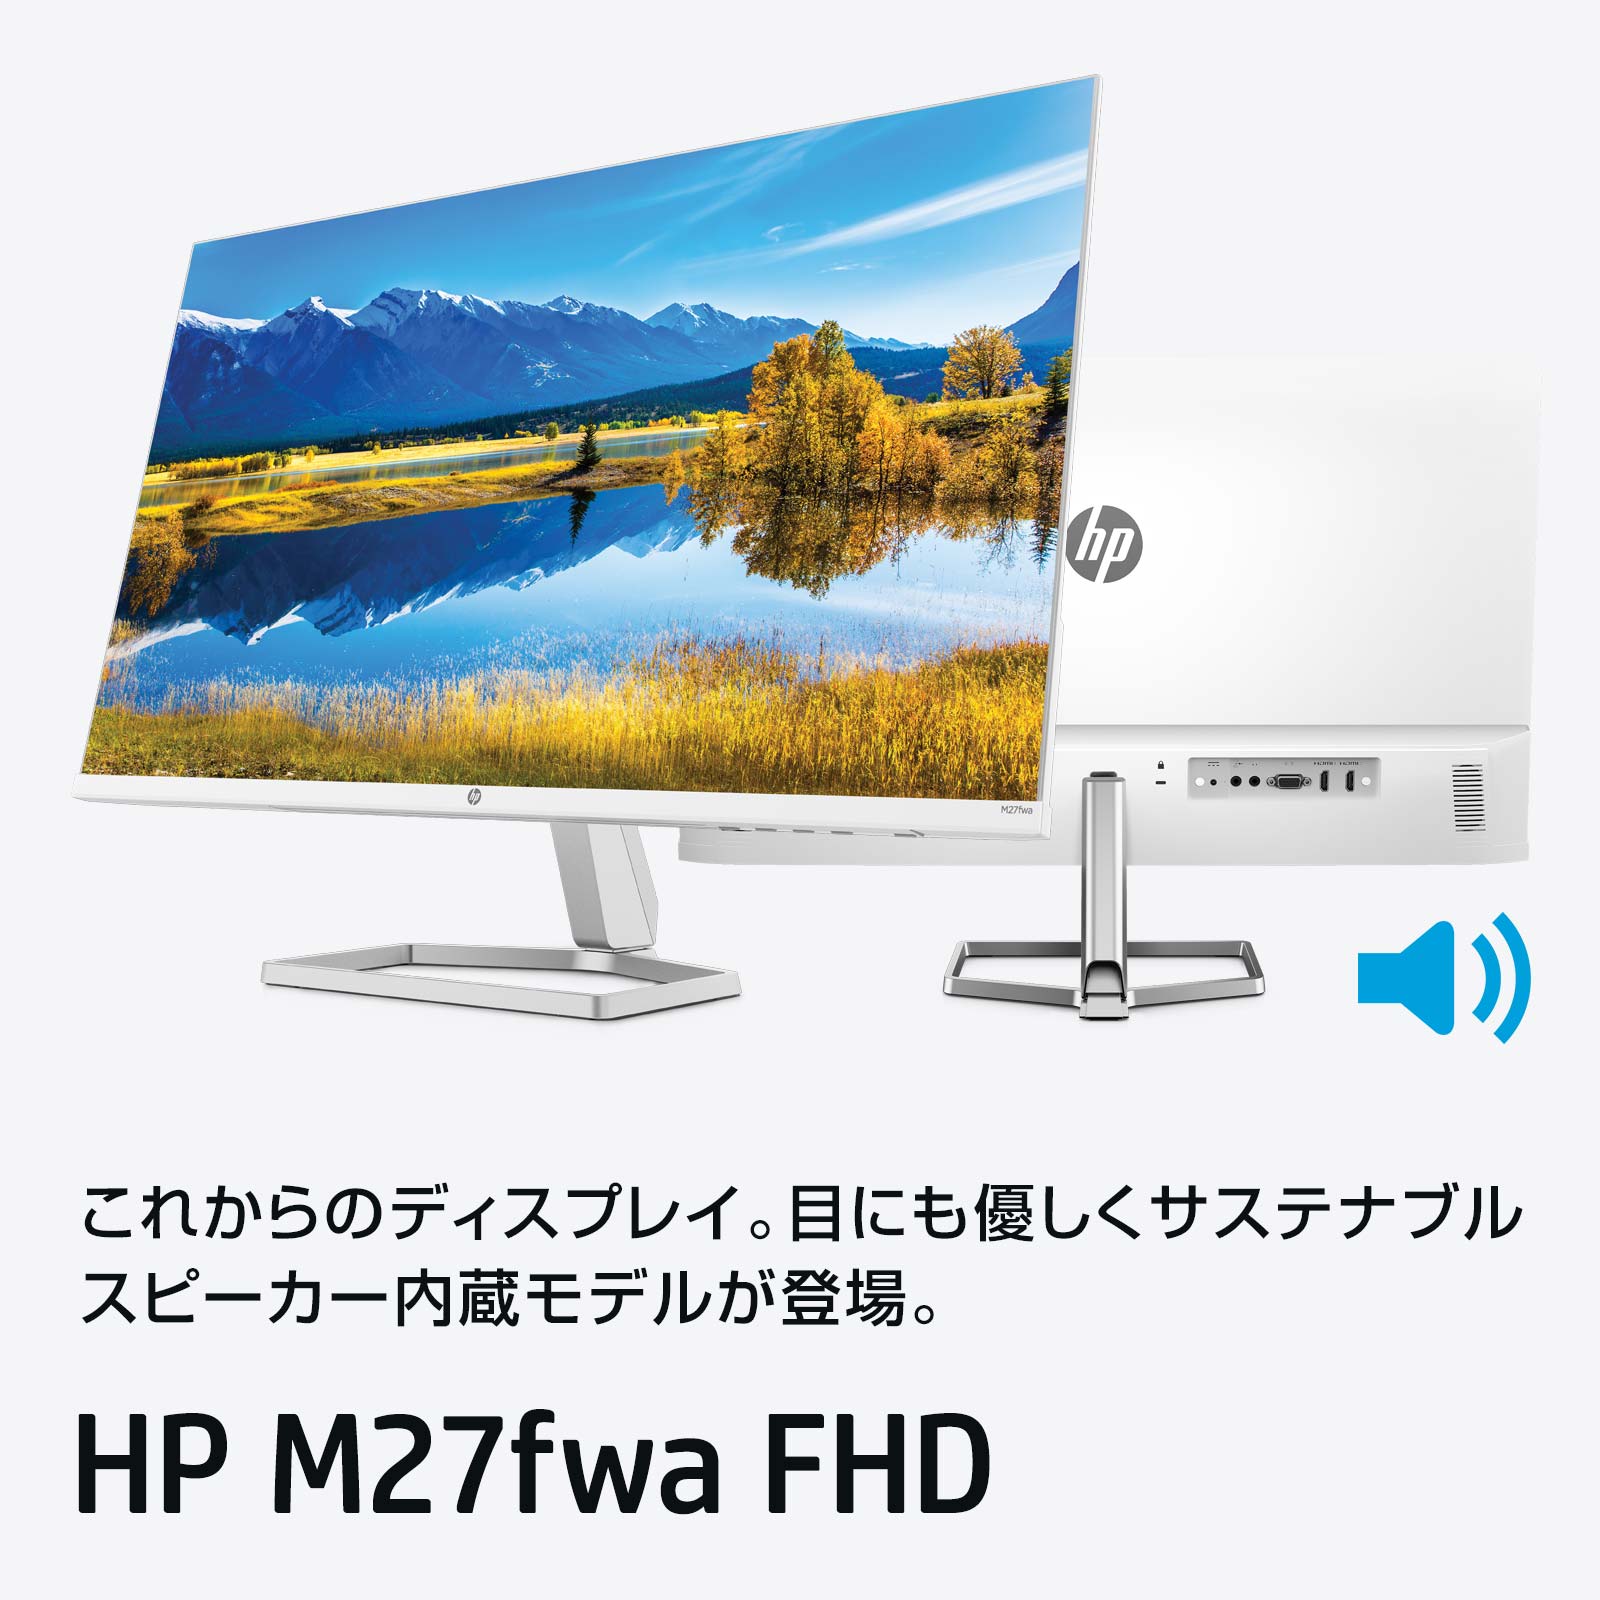 HP M27fwa FHD ディスプレイ 定価34,-